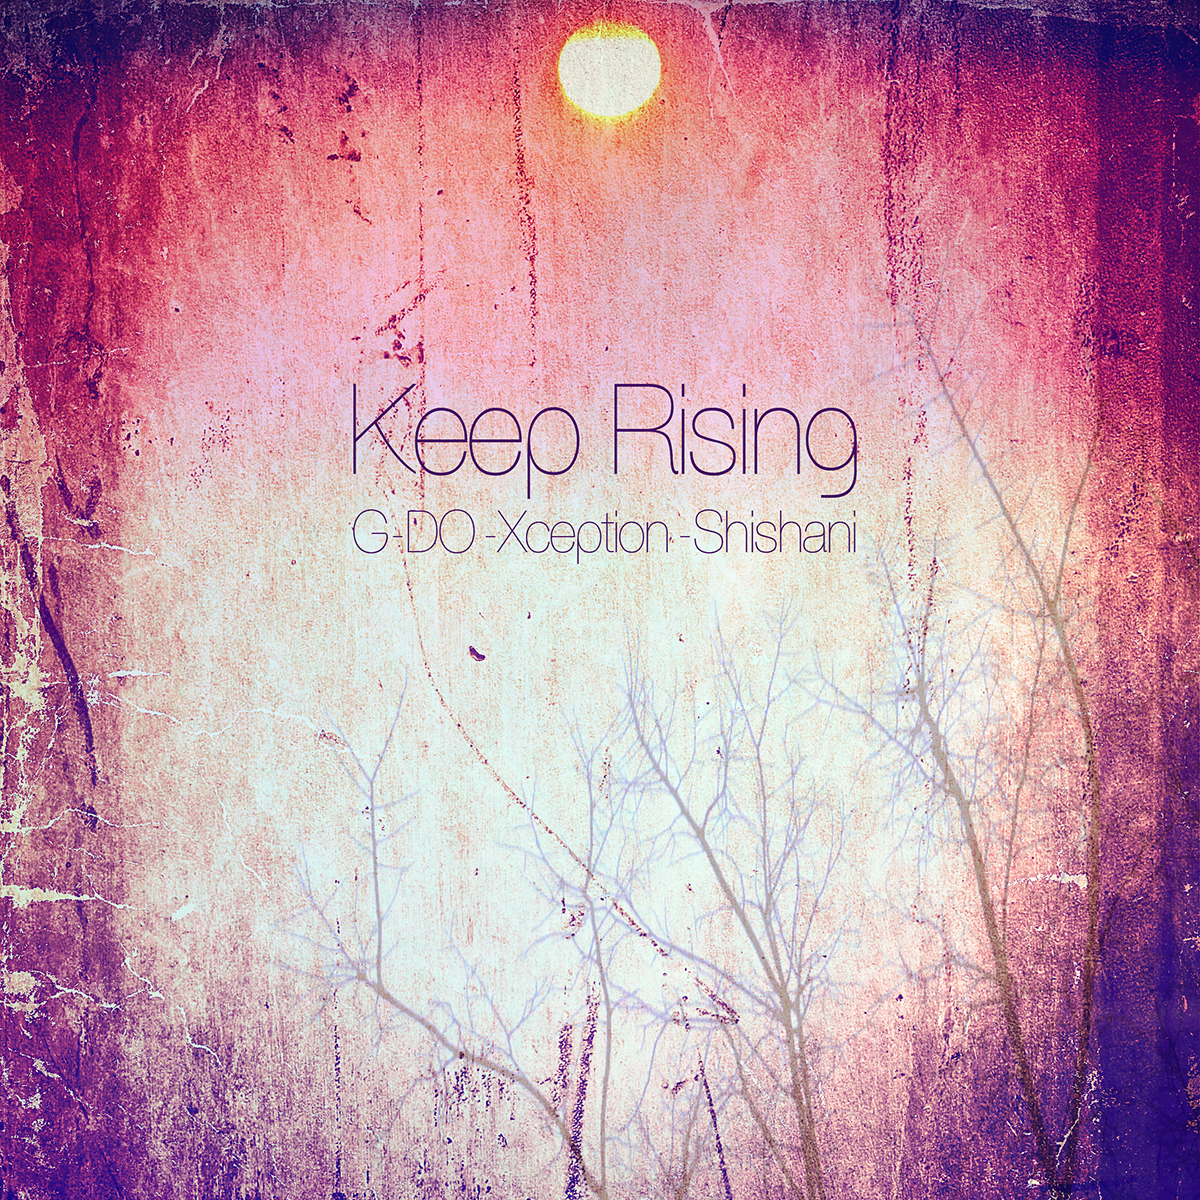 Video: G-Do & Xception (feat. Shishani) – Keep Rising